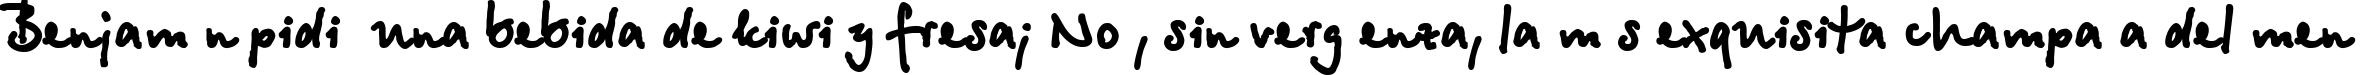 Пример написания шрифтом PT BetinaScript Bold Cyrillic текста на испанском